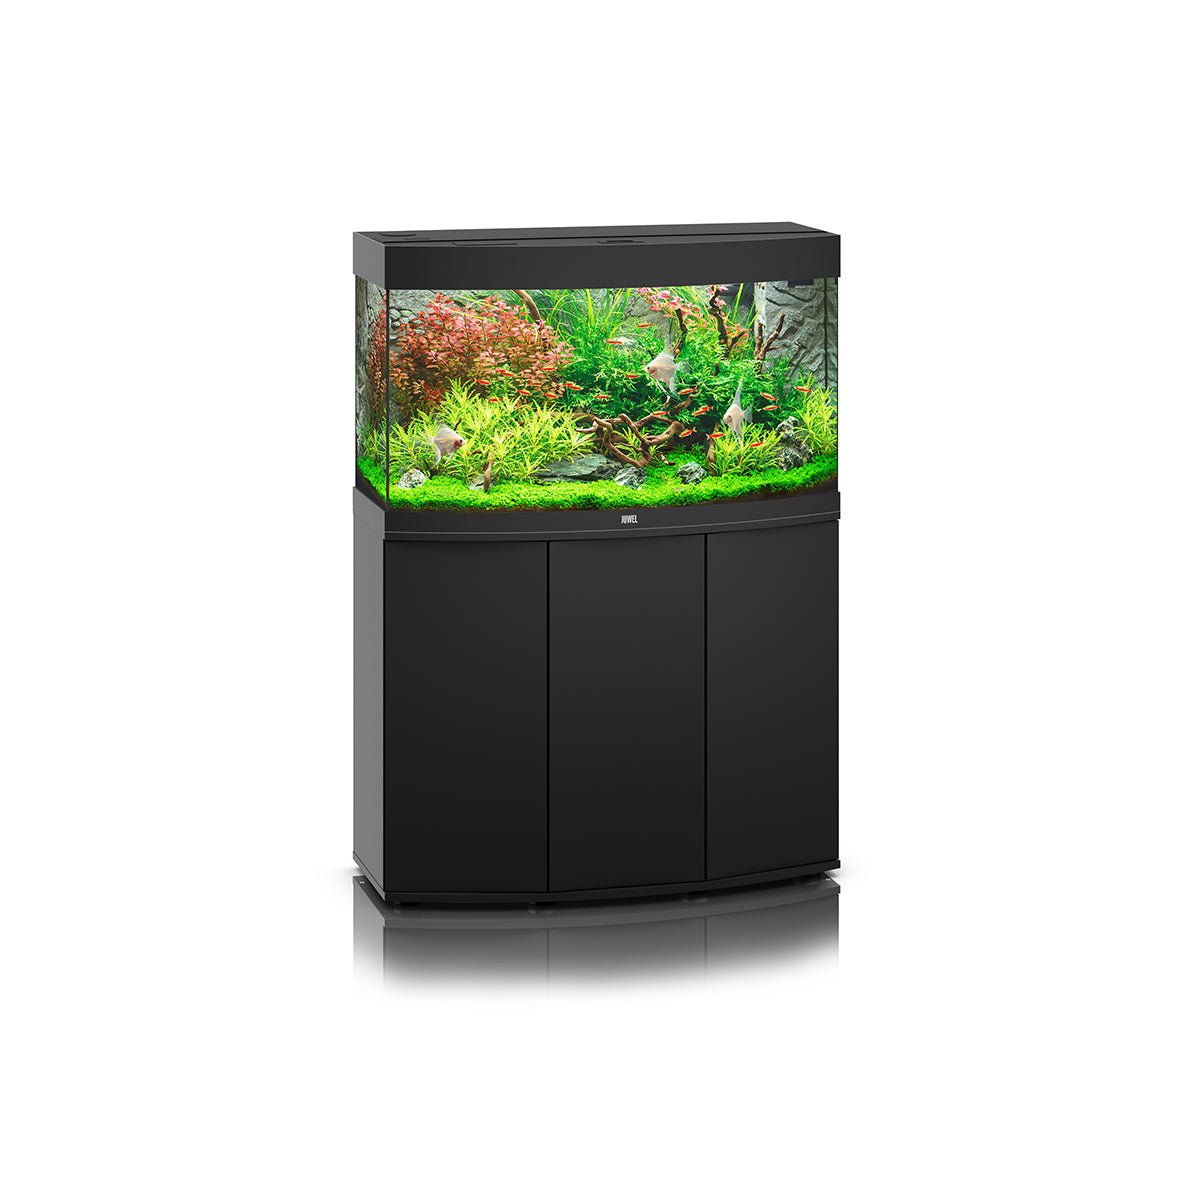 Juwel Vision 180 LED Aquarium and Cabinet (Black) - Charterhouse Aquatics